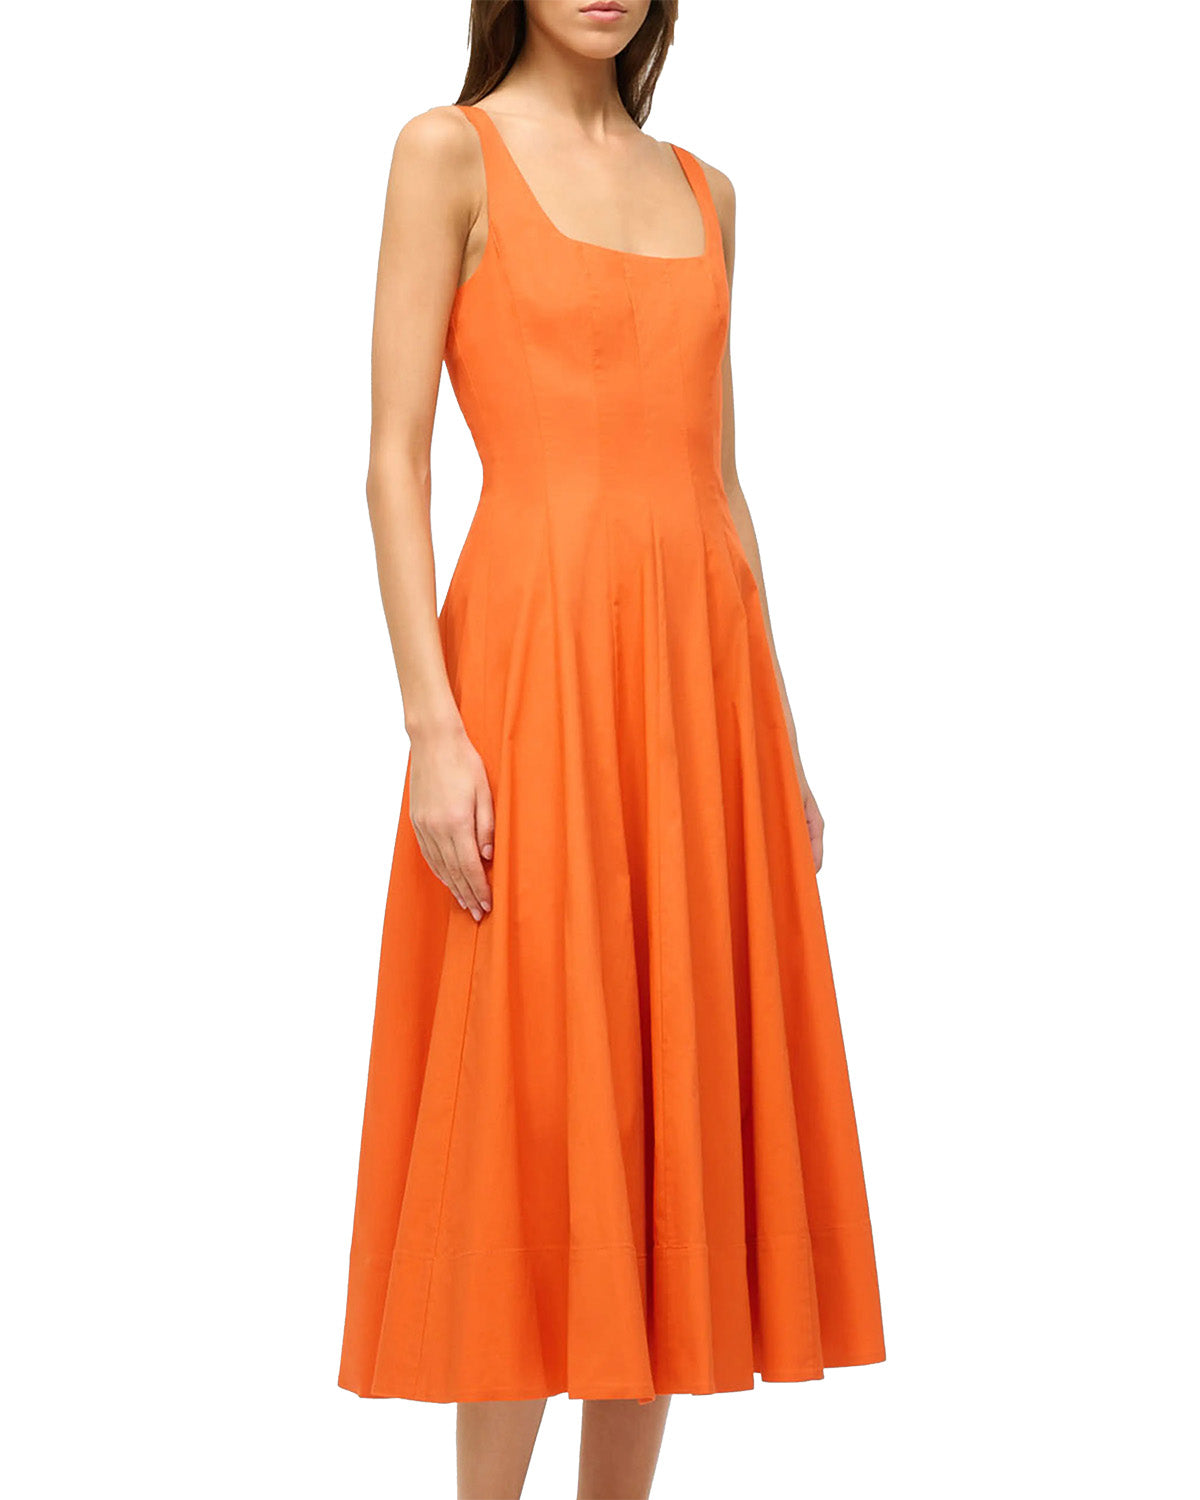 Wells Dress (Tangerine)